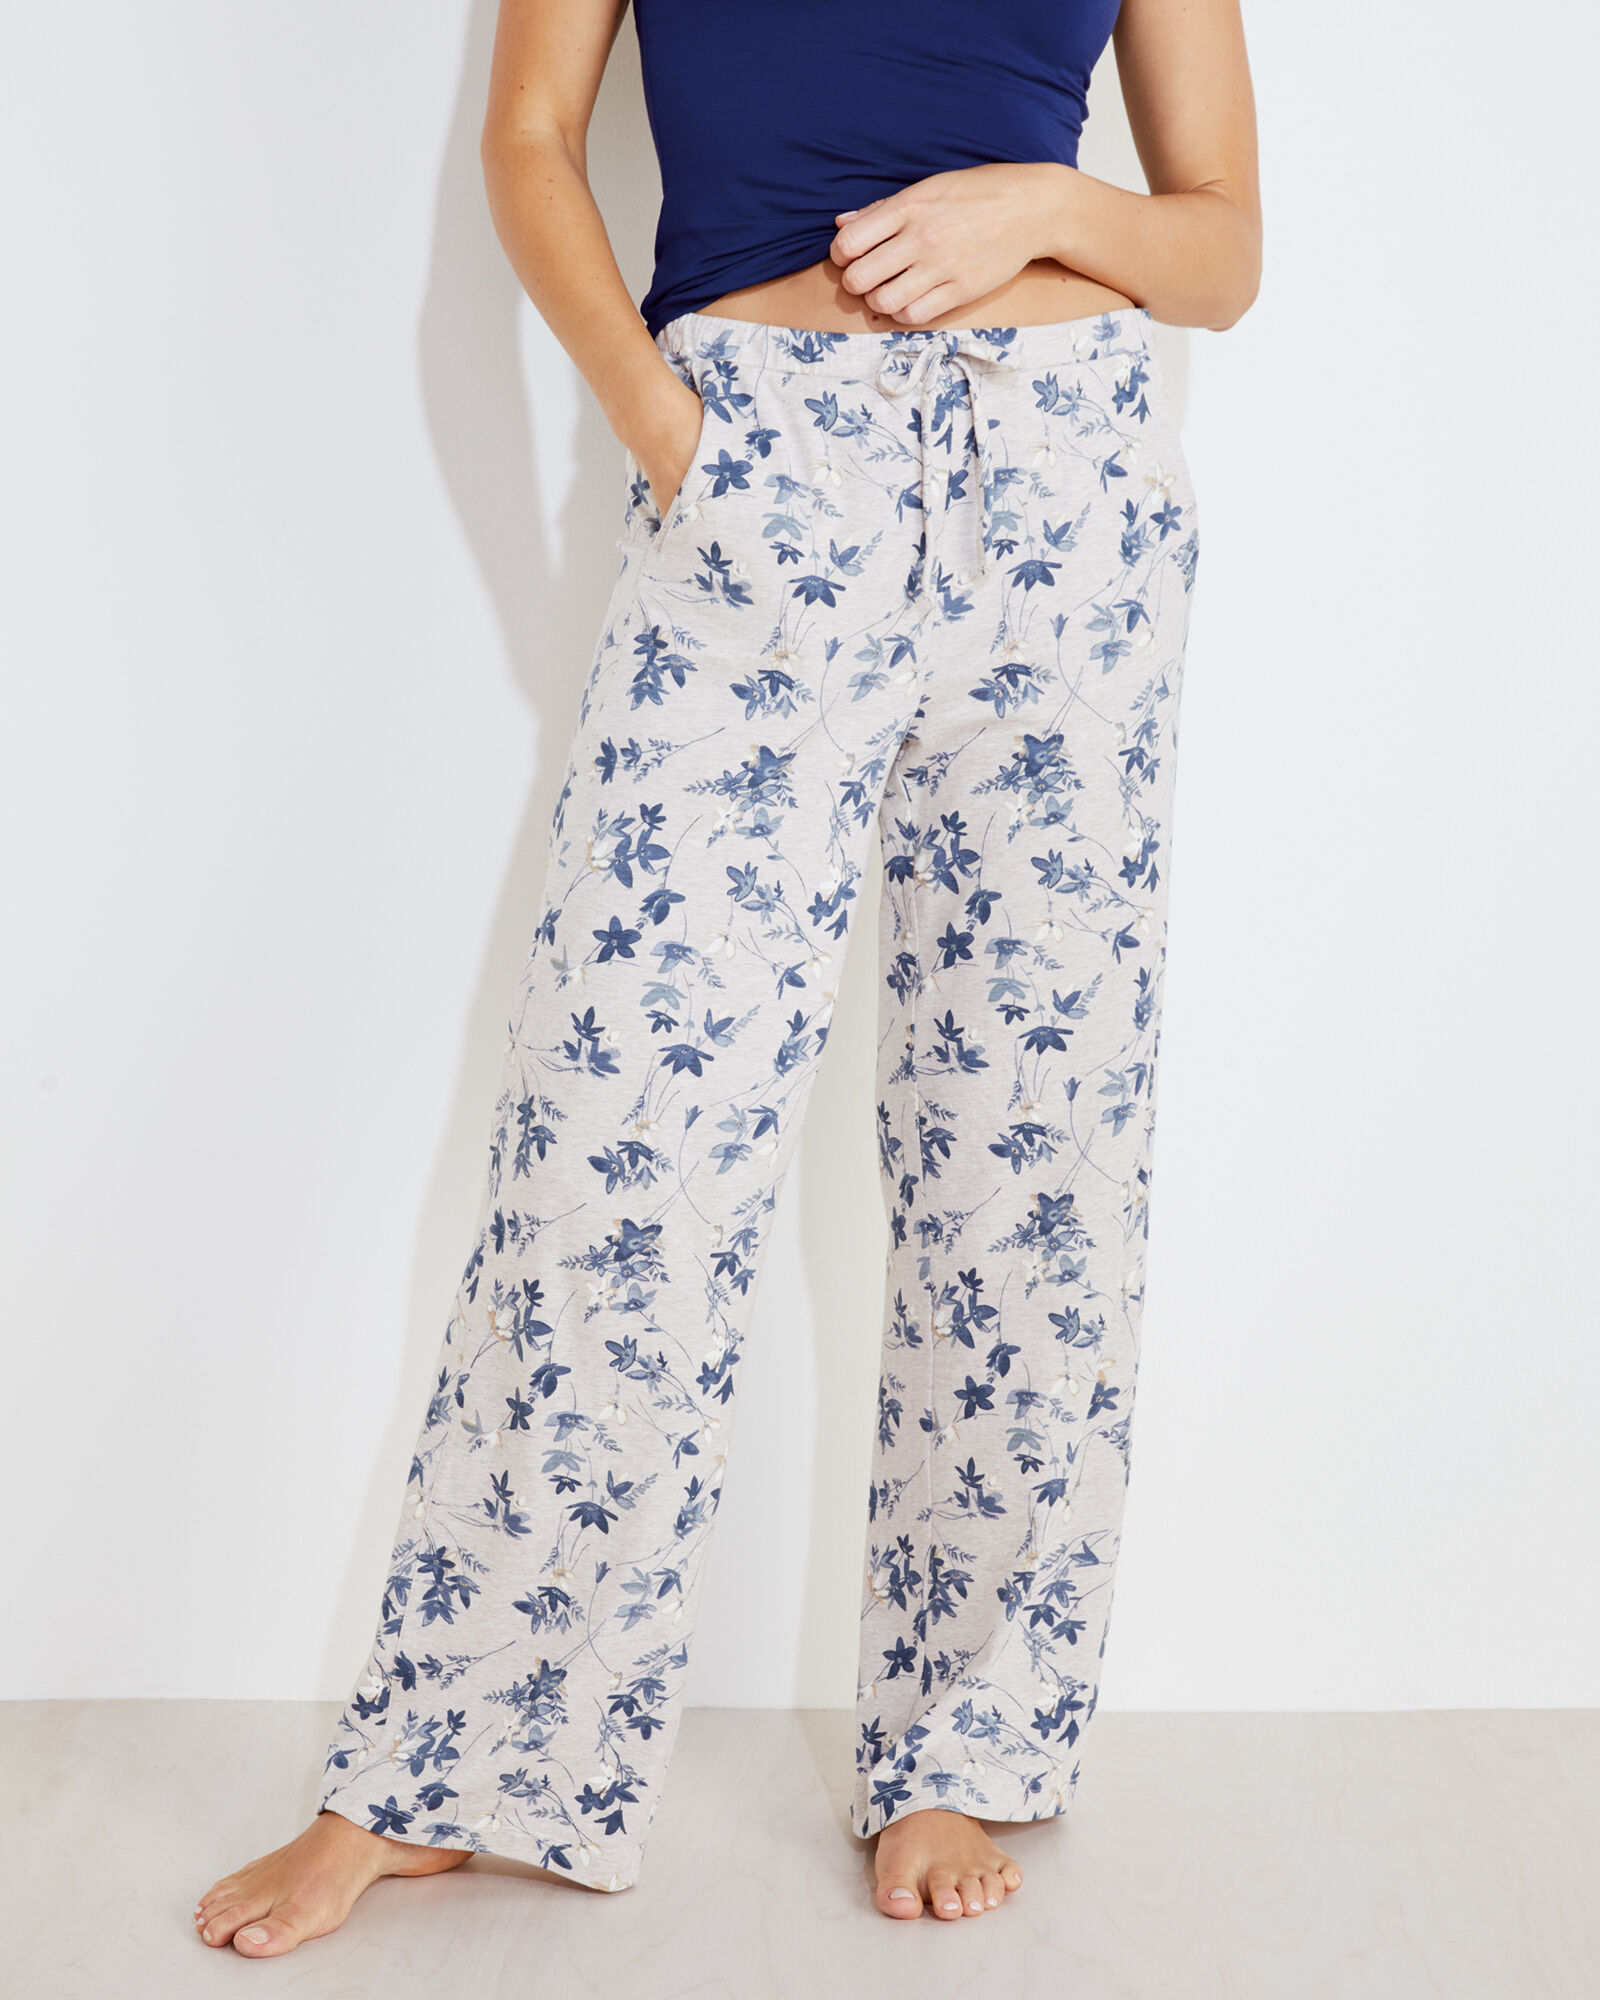 Pendleton Women’s Pants Size 8 White Blue Flowers Lined